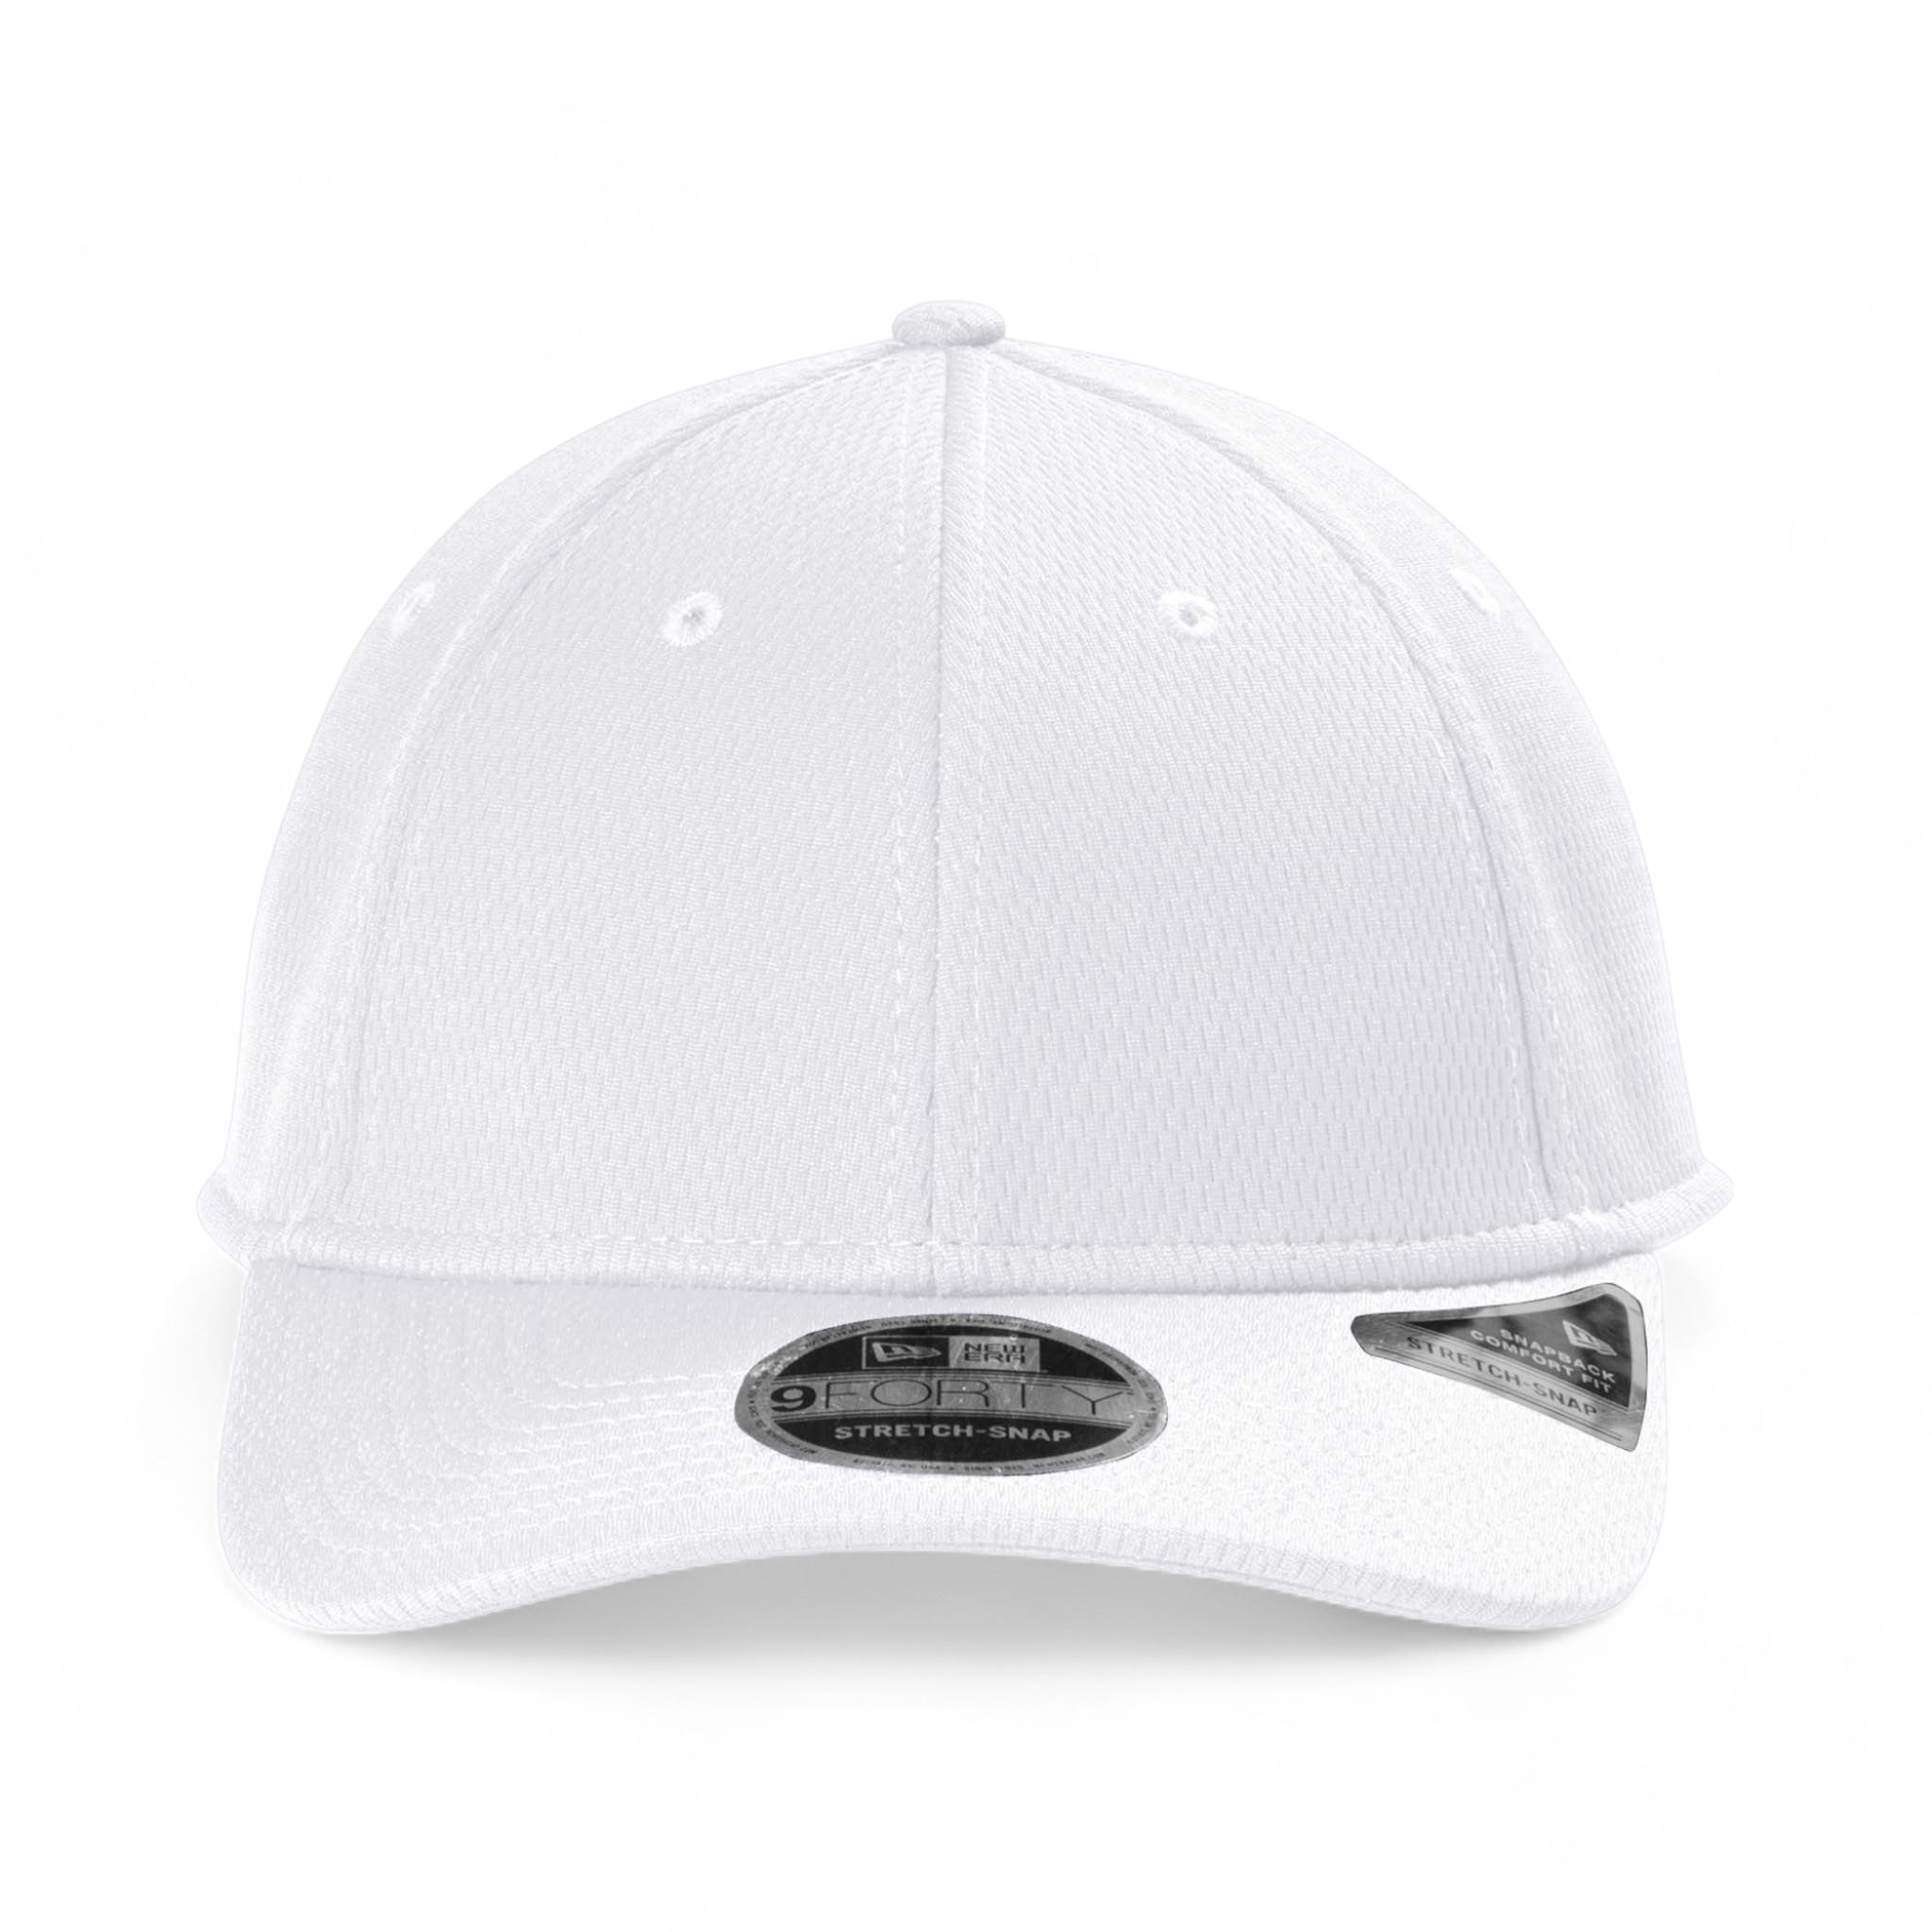 Front view of New Era NE209 custom hat in white